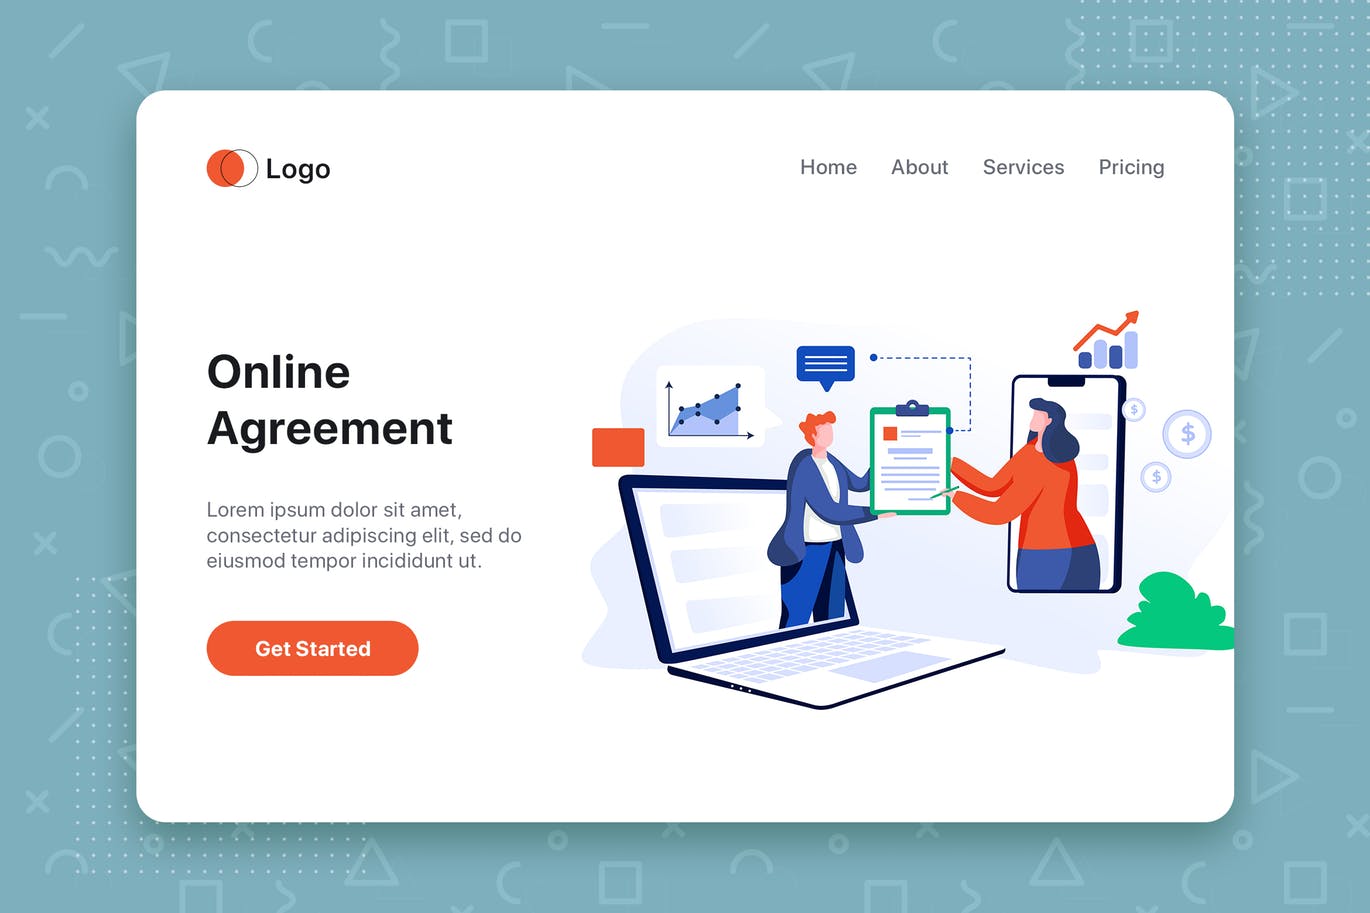 在线协议签订网站首页设计矢量插画素材 Online Agreement flat concept for Landing page插图